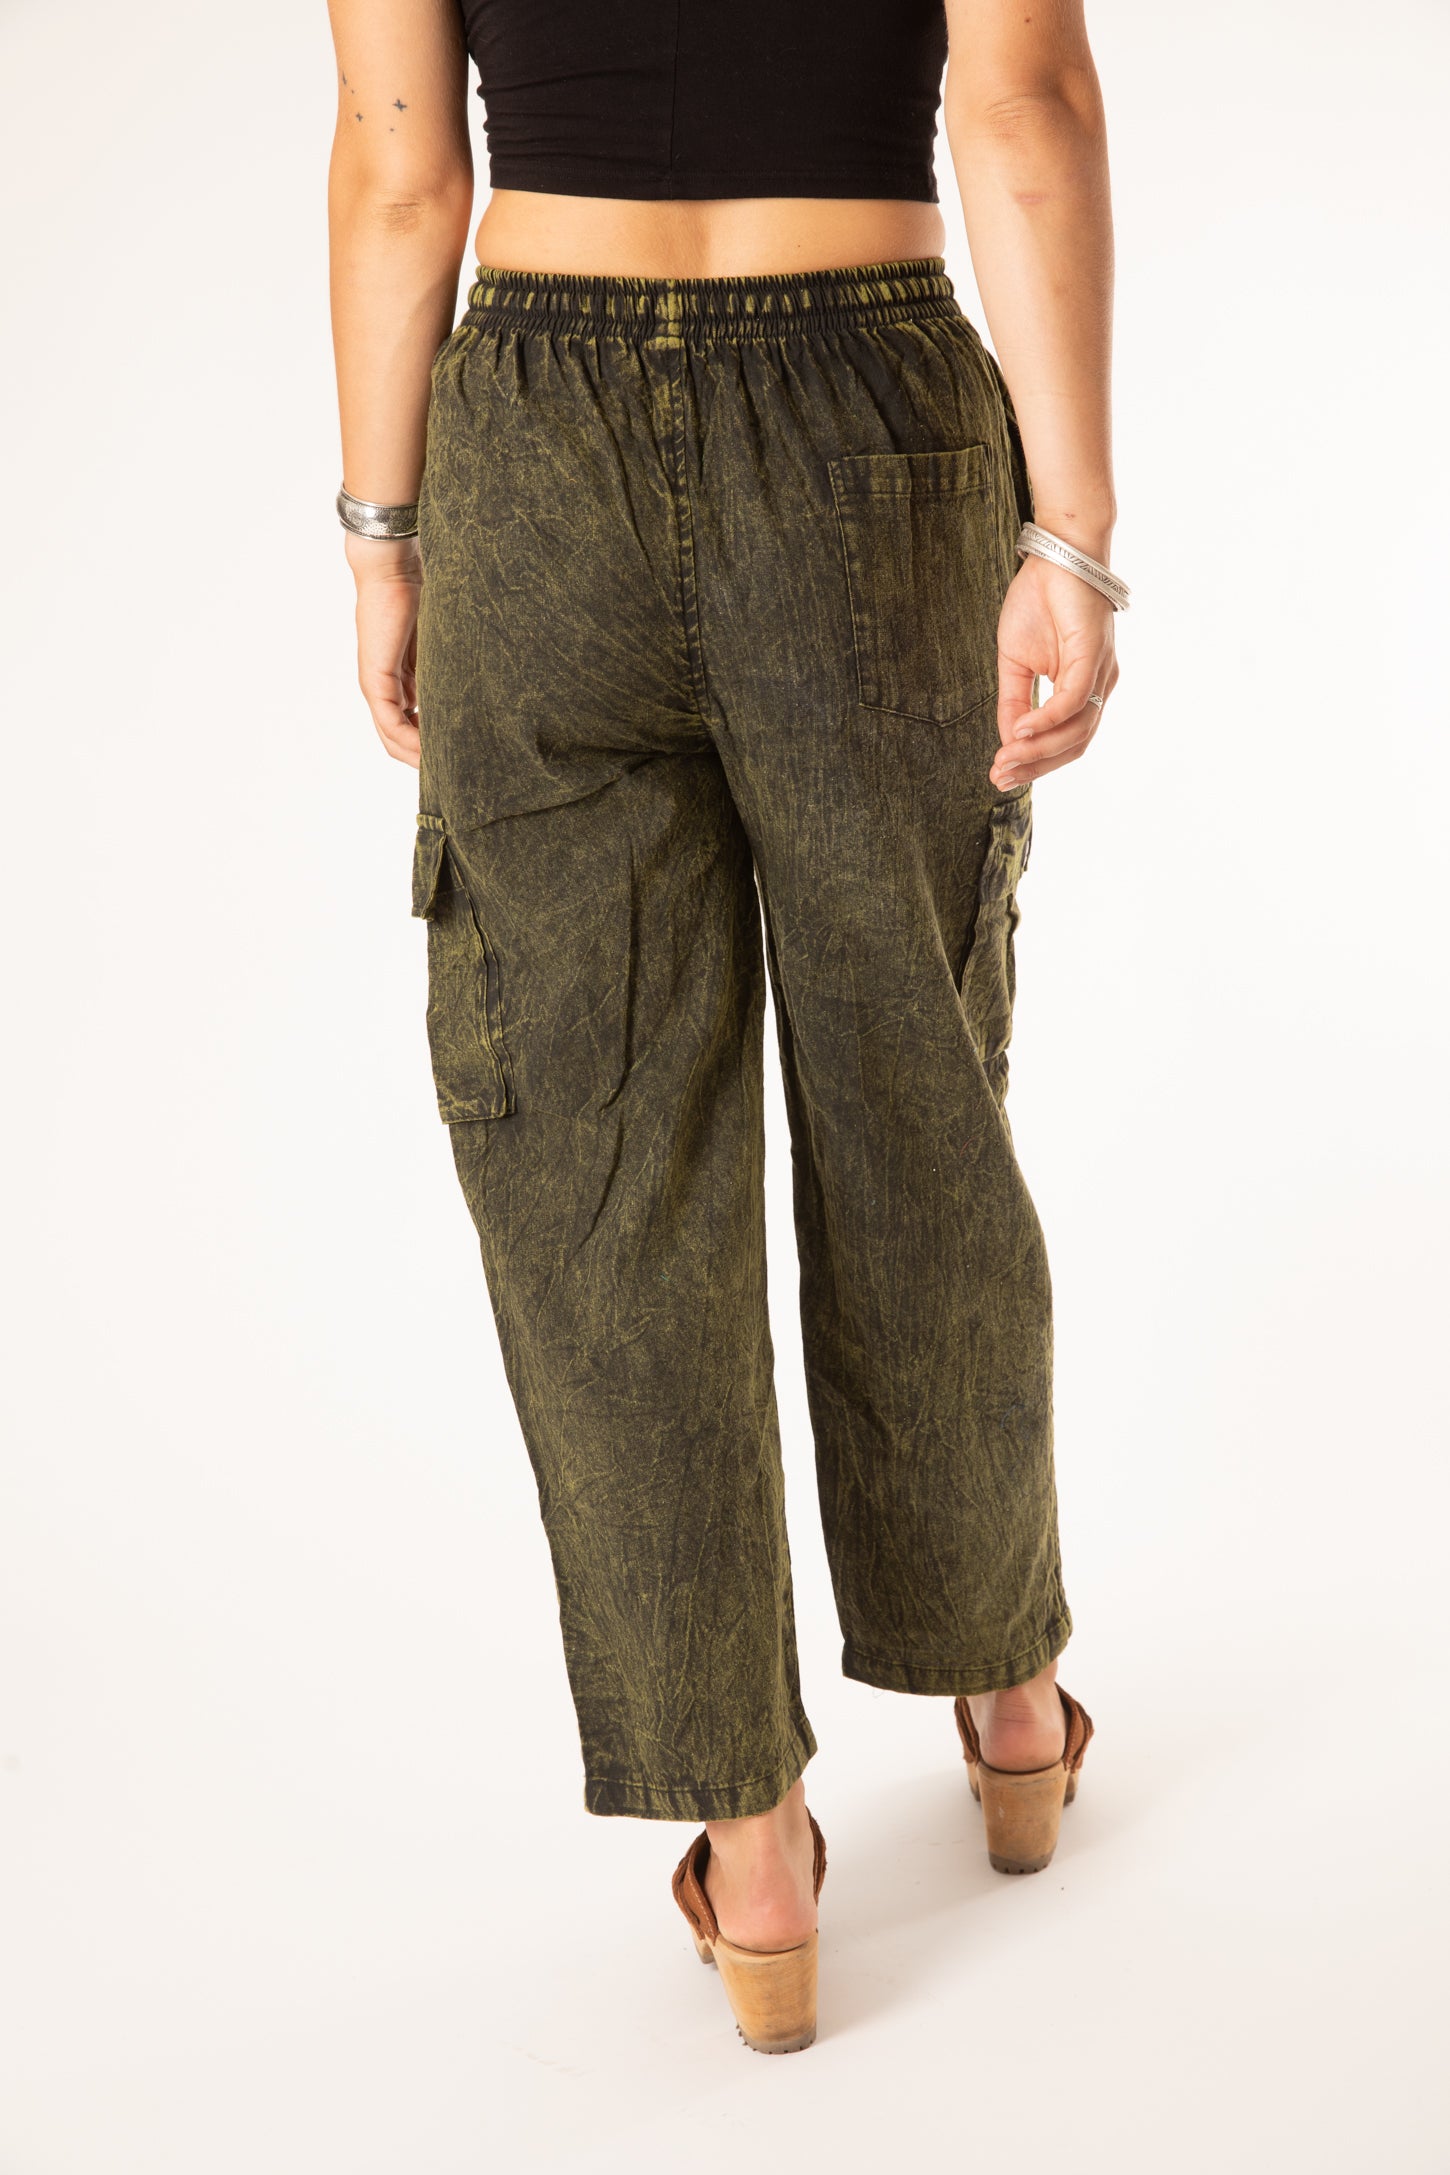 Hippie pants | Sharma trousers